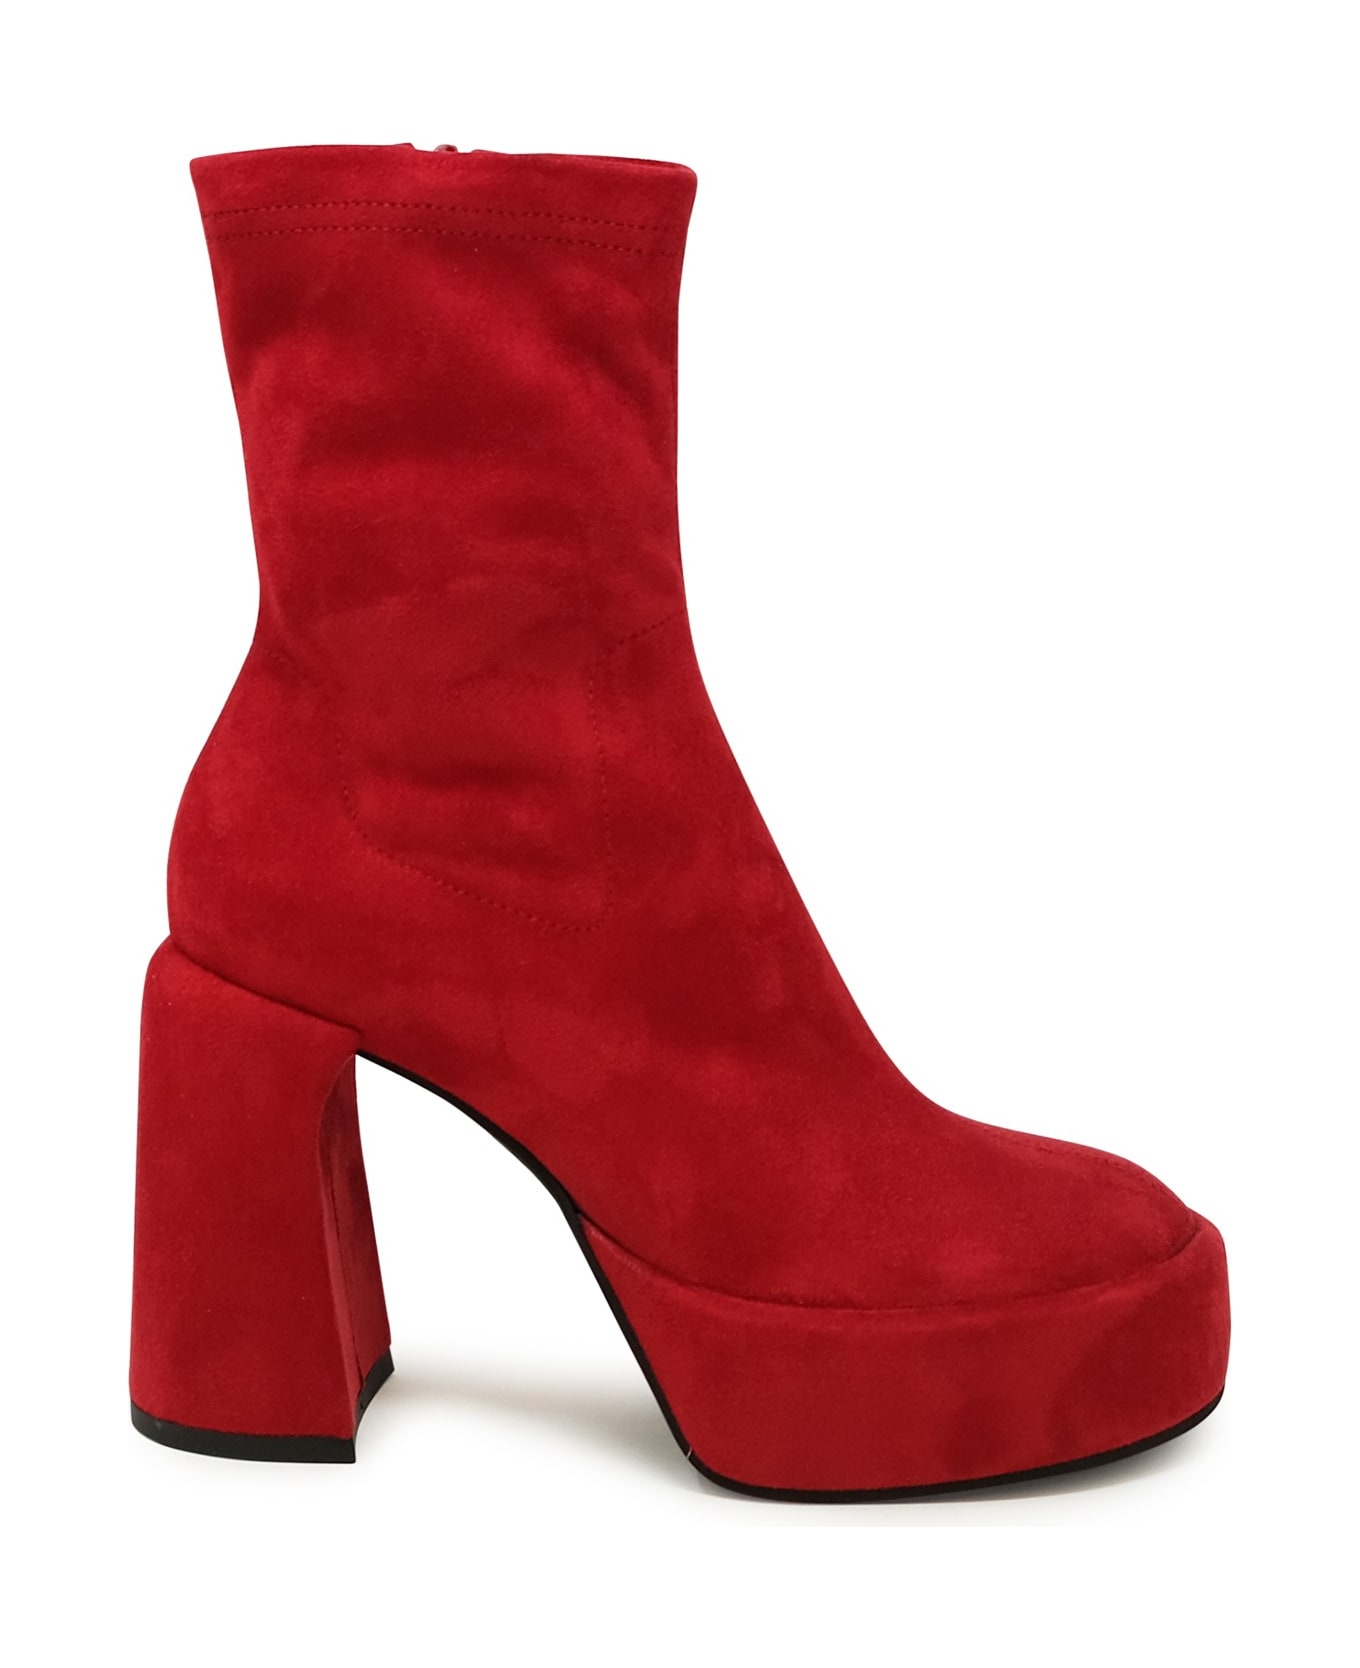 Elena Iachi Ecodaino Zelda Ankle Boots - RED ブーツ